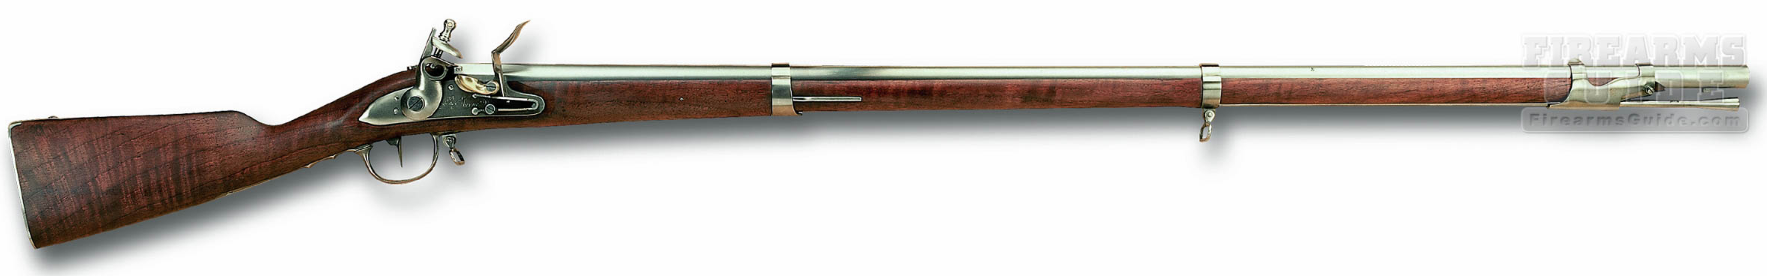 Pedersoli Revolutionnaire 1777 Standard Flintlock